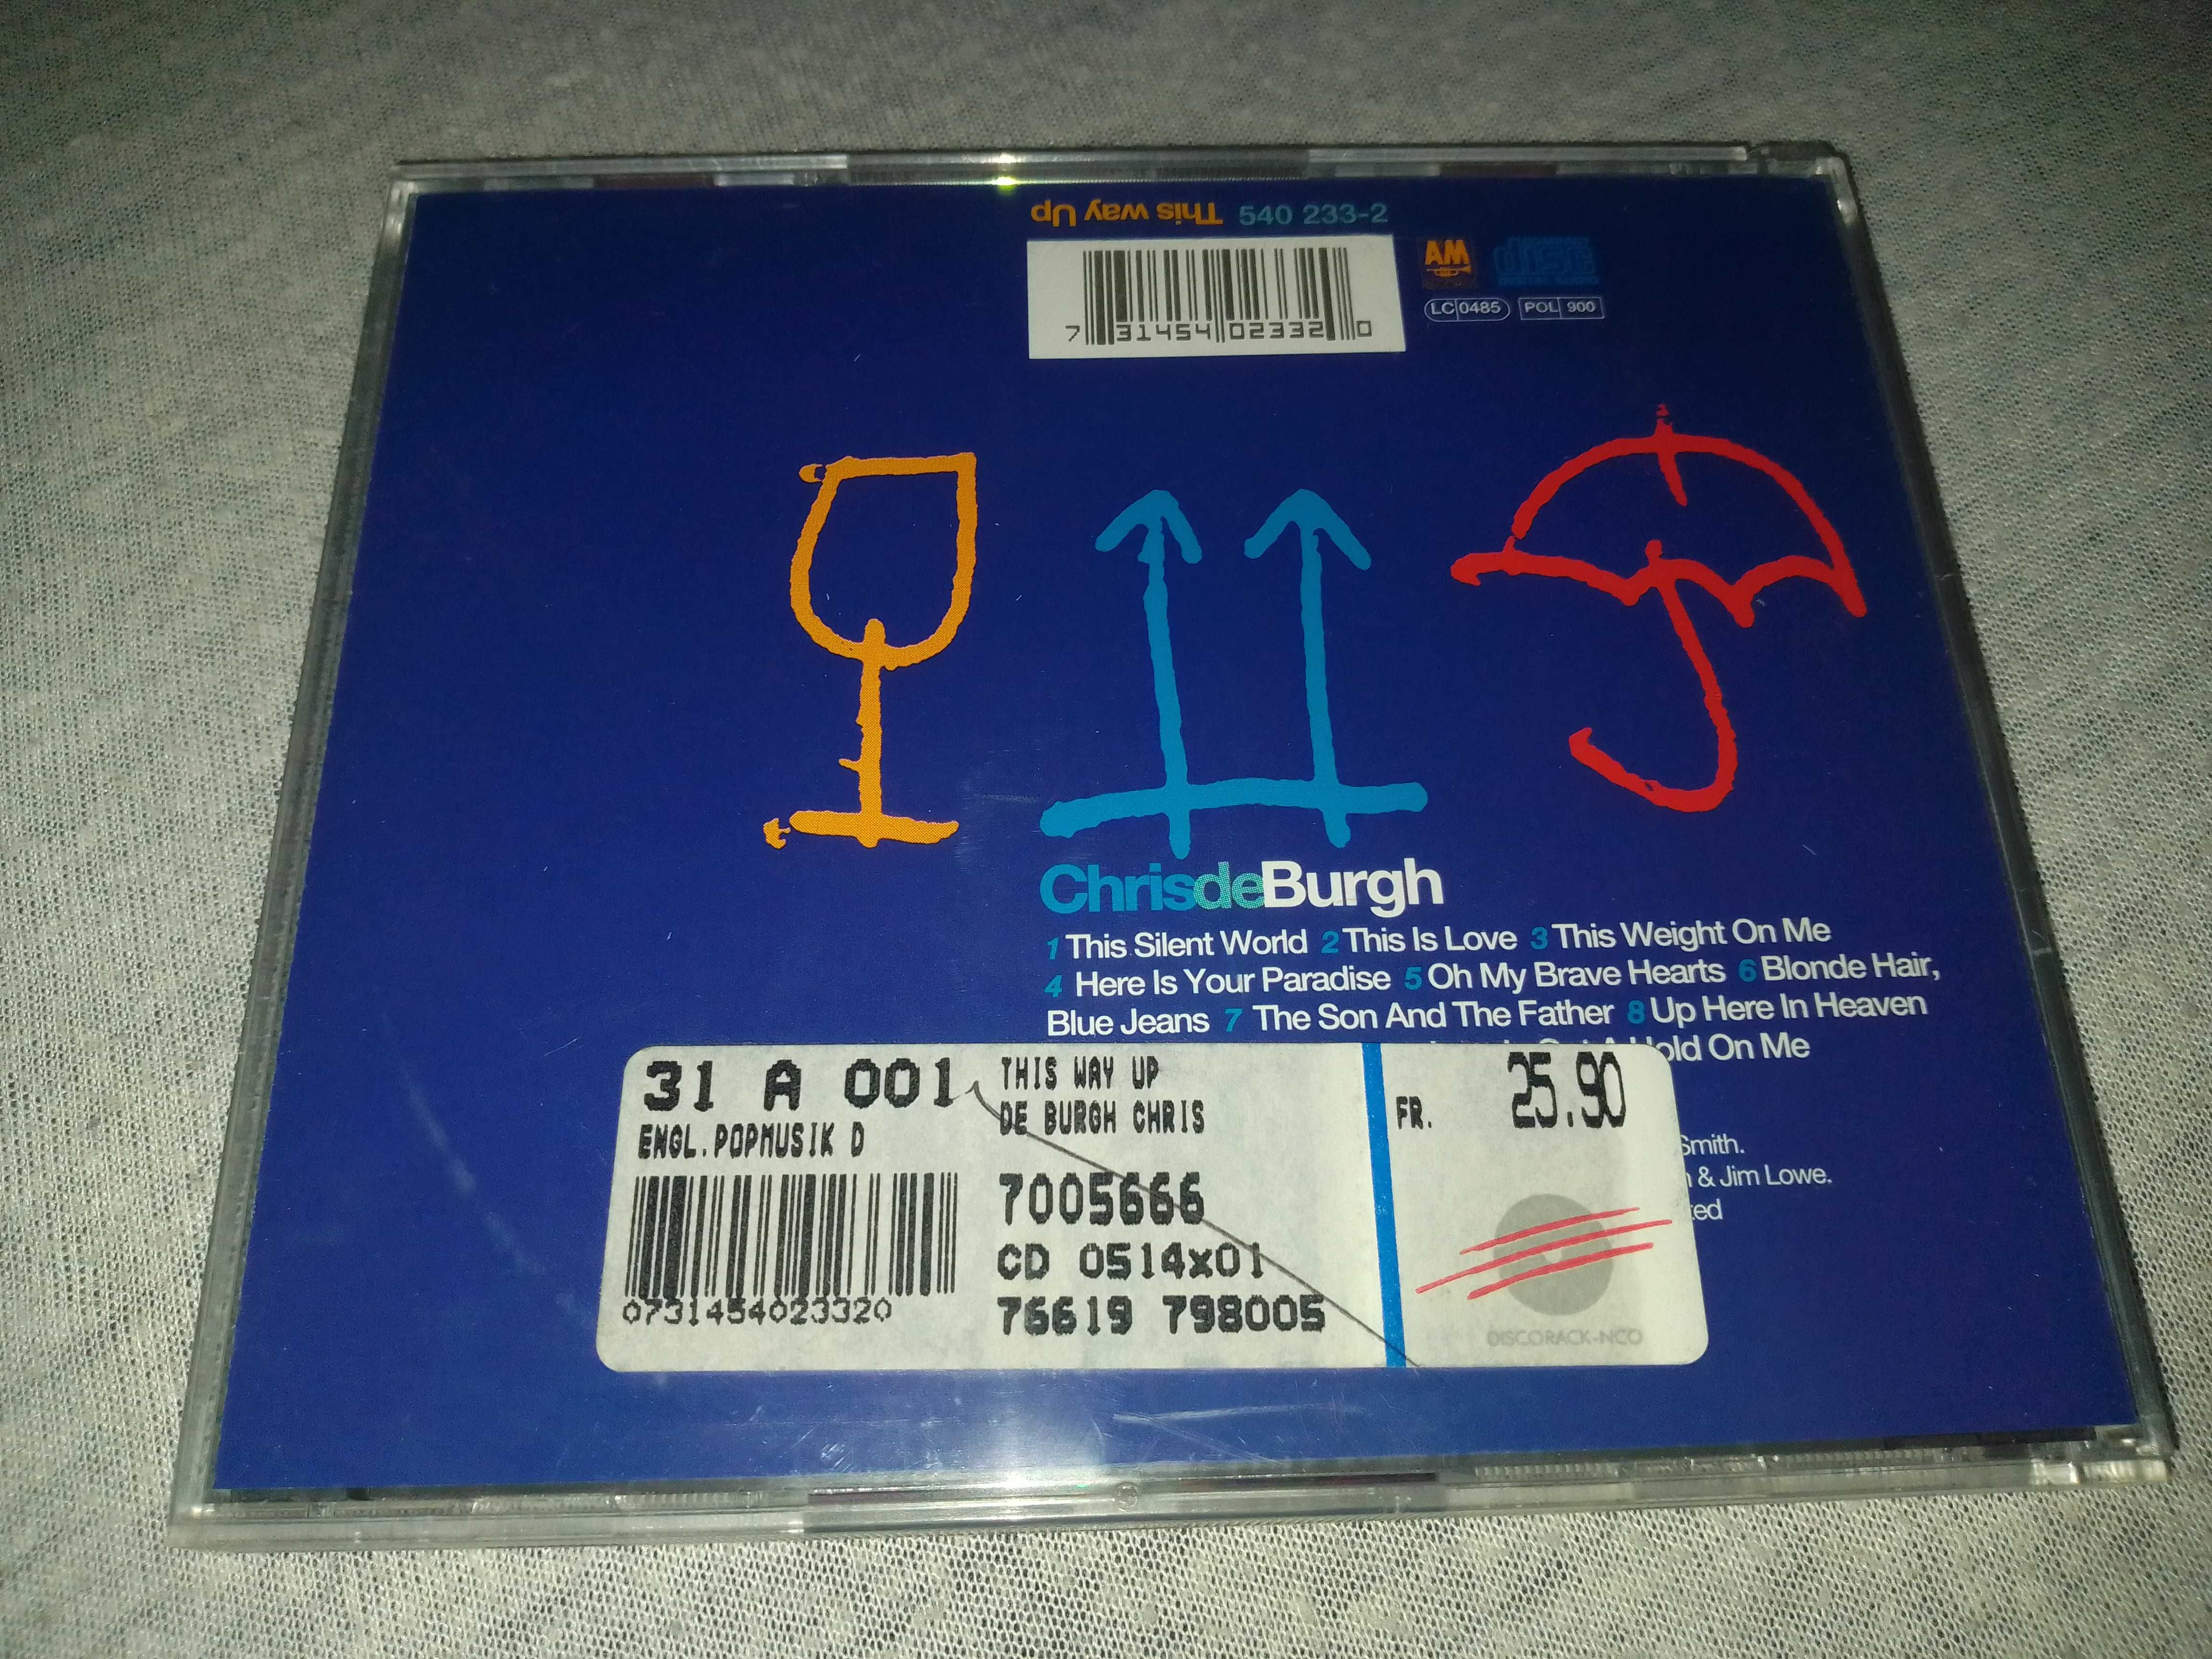 Chris de Burgh "This Way Up" фирменный CD Made In Germany.